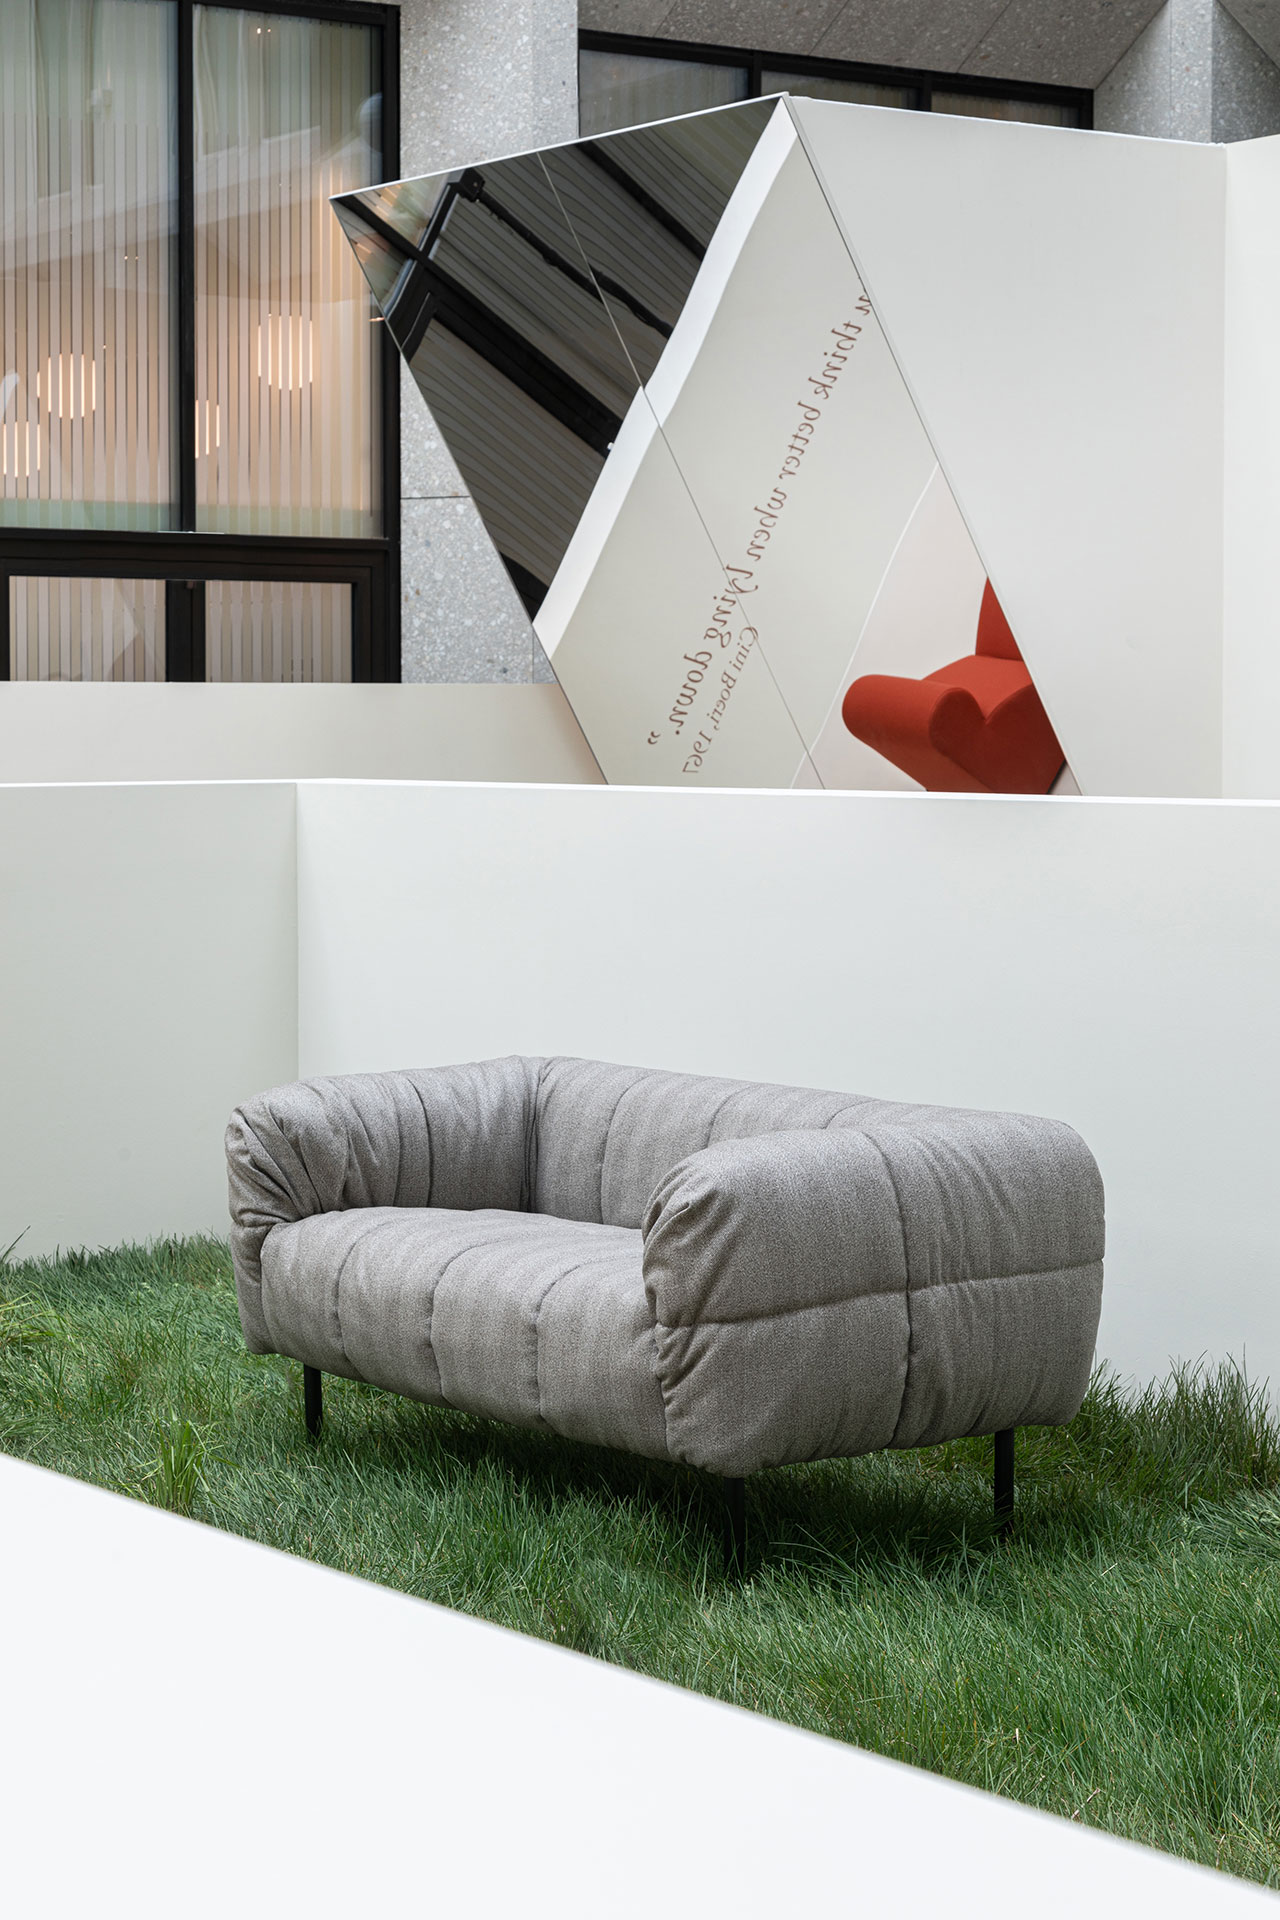 Pecorelle Sofa. Designed by Cini Boeri for artflex in 1972. Upholstery: Loro Piana Interiors Pecora Nera® in two natural shades, Undyed.
Photography © Loro Piana.